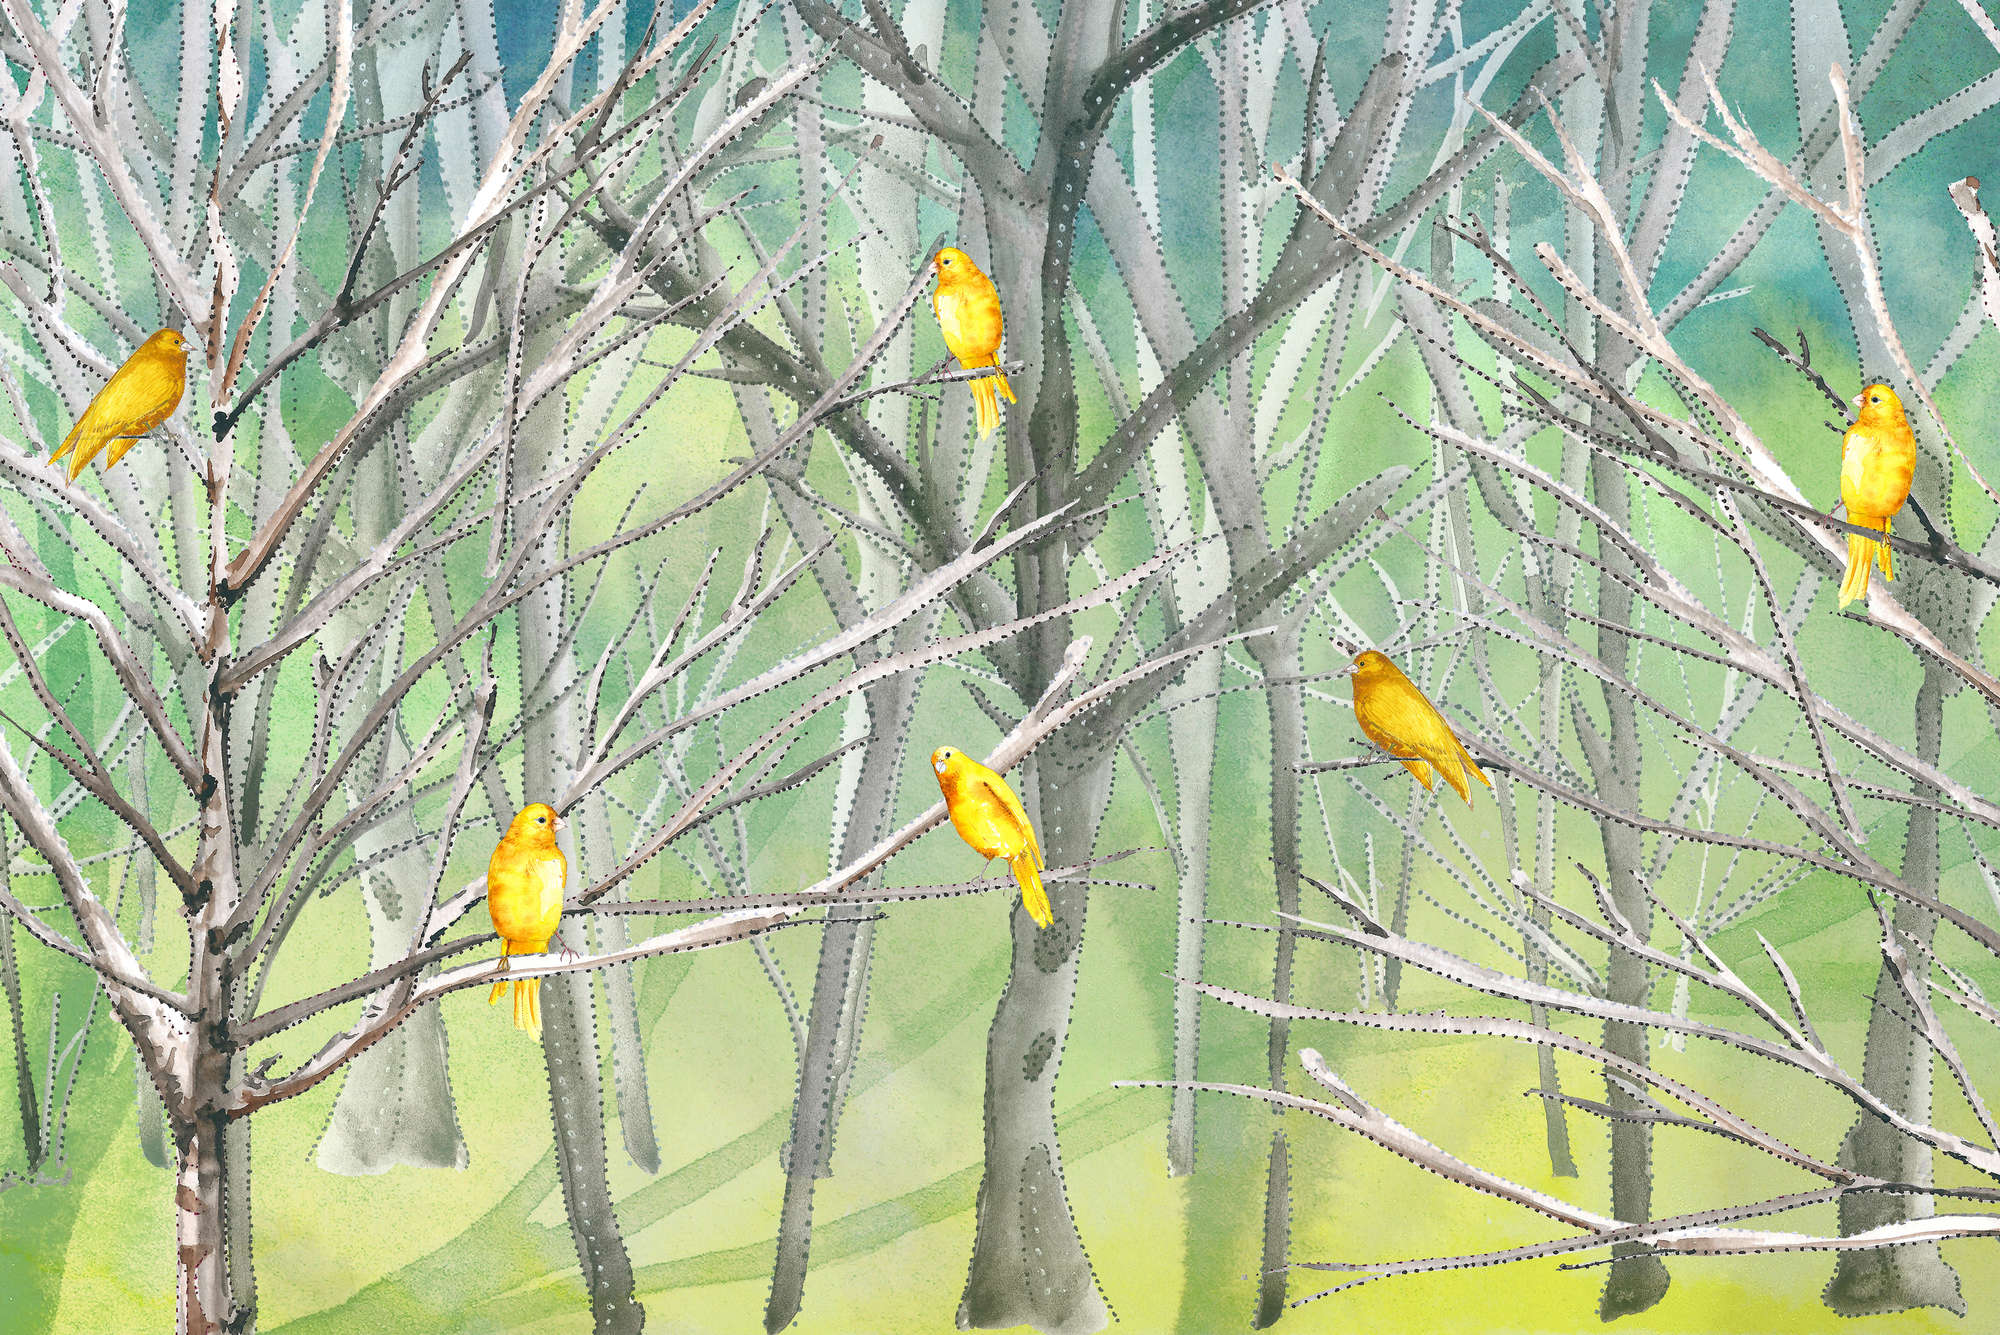             Bosbehang met vogels in blauw en geel op matte gladde vliesstof
        